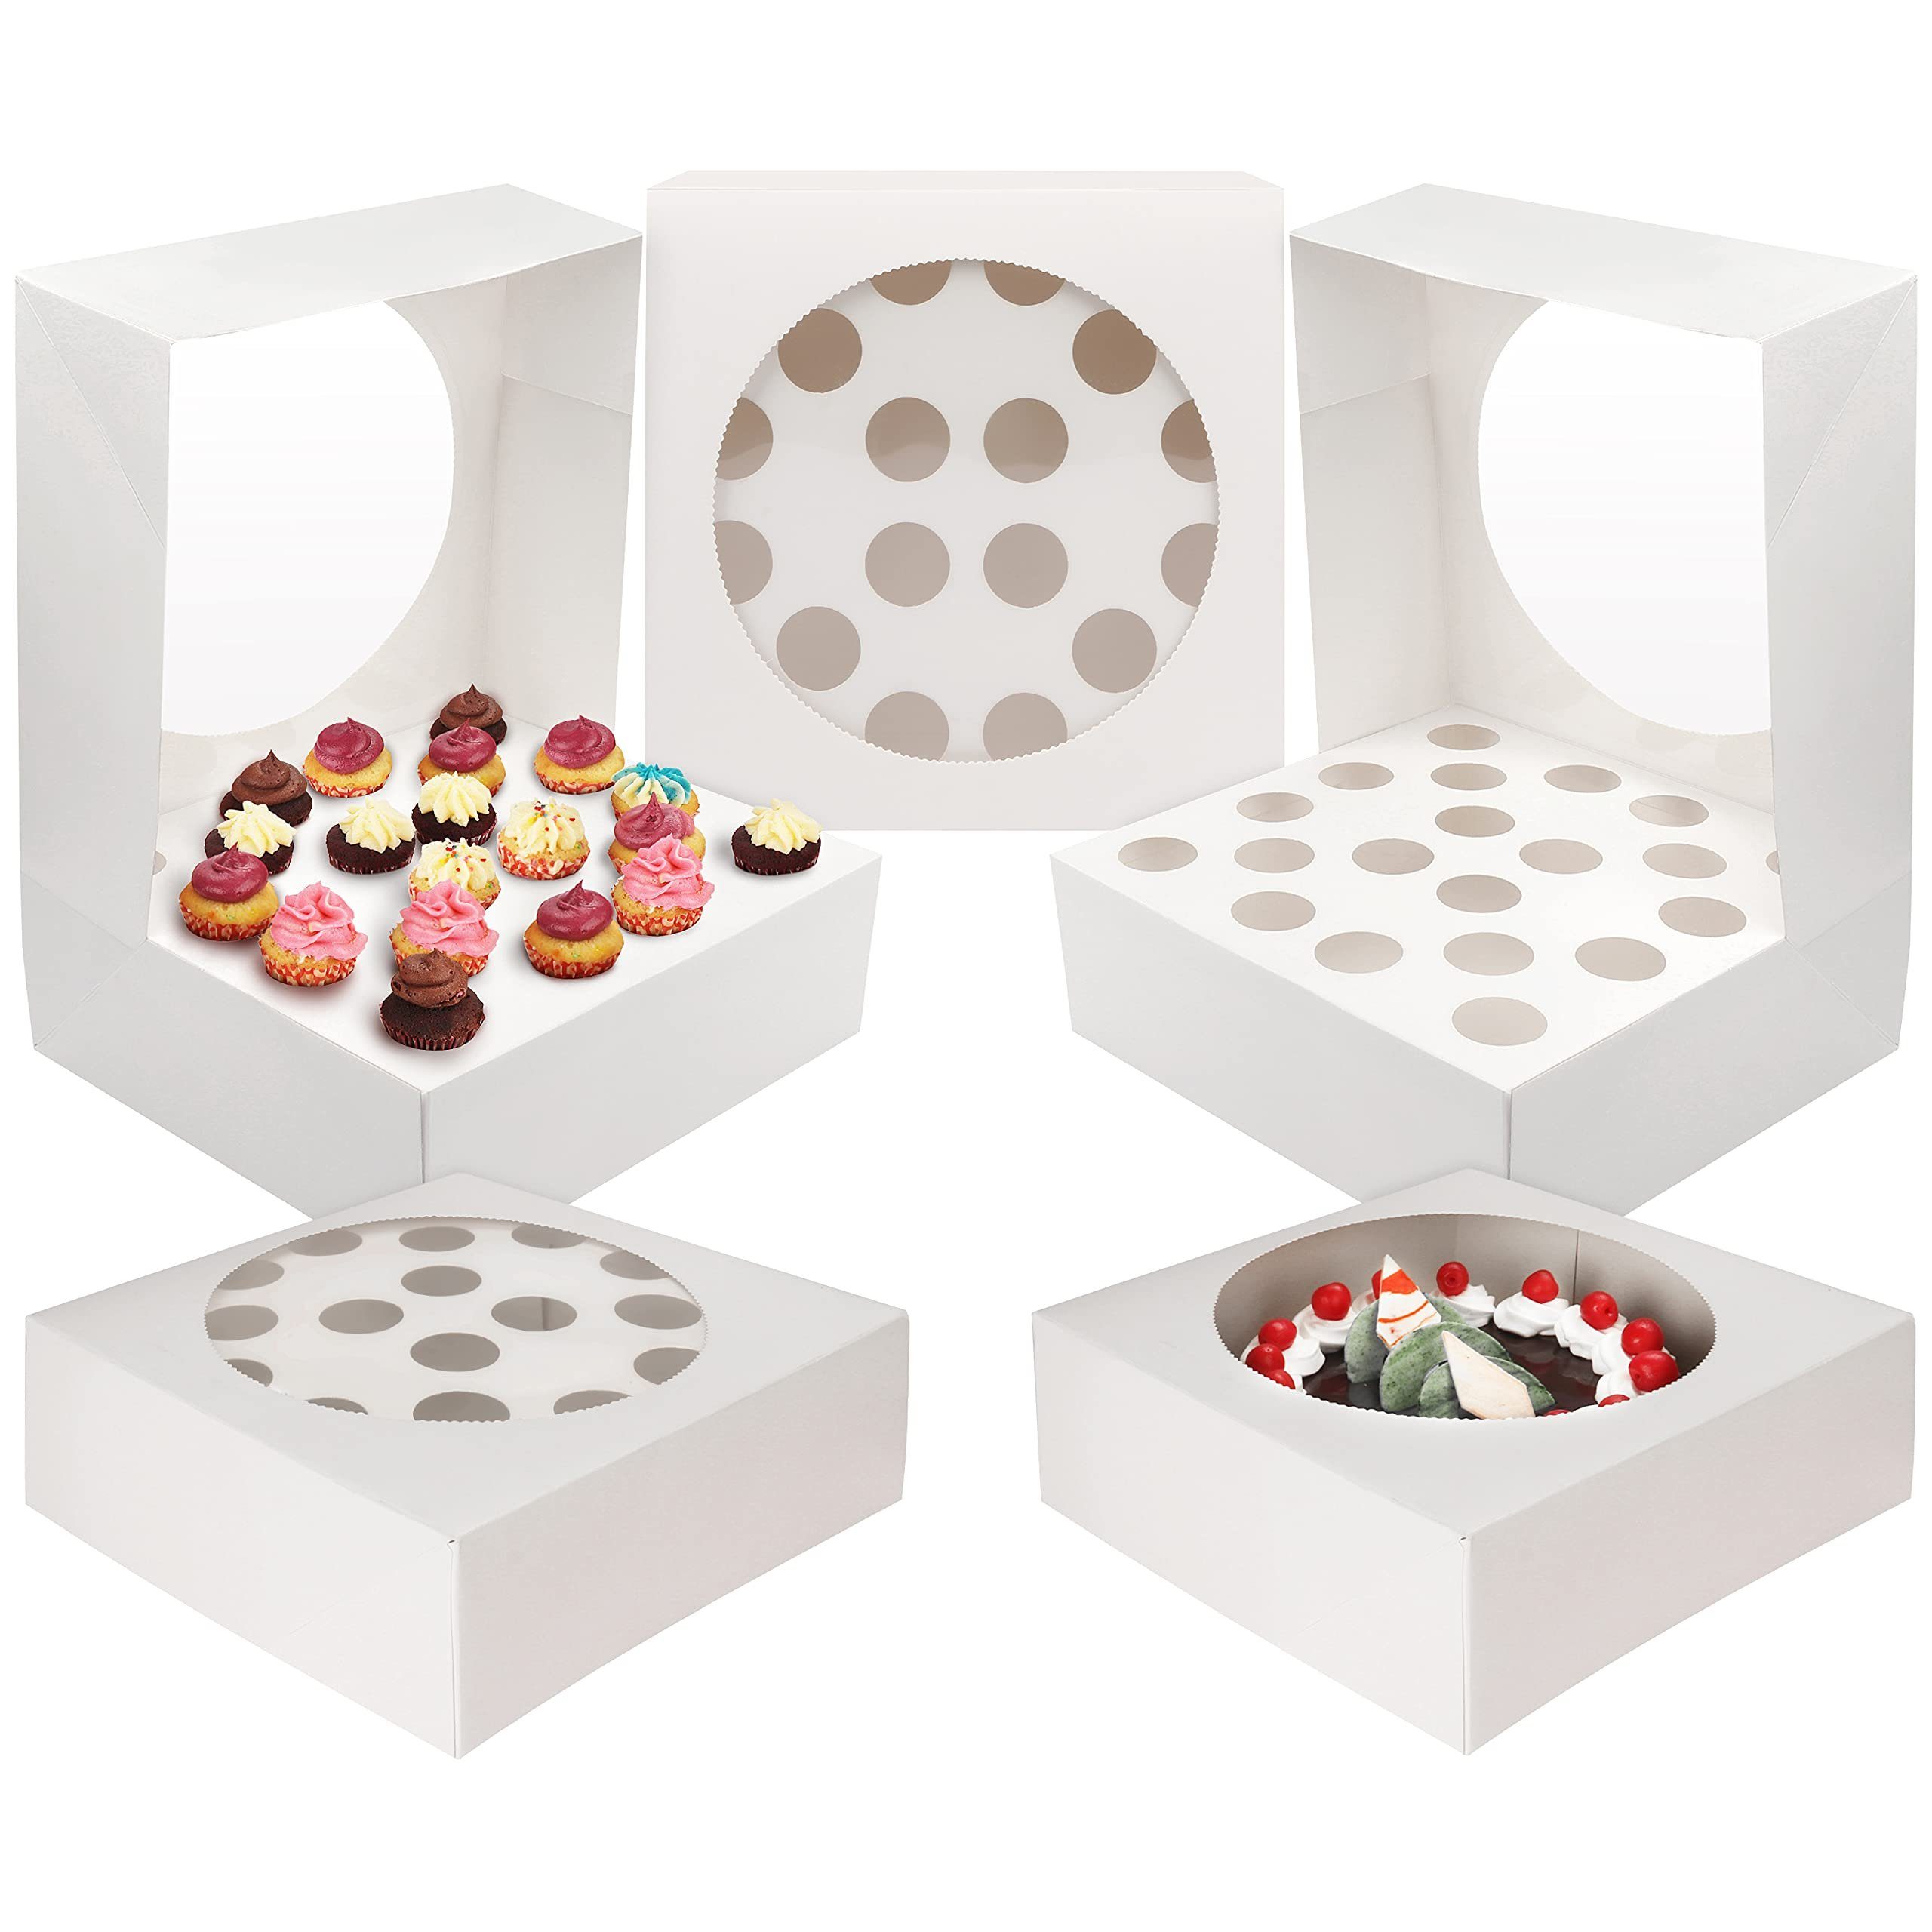 5er 5 for - 20 Box Cakes für Mini Vorratsdose White Karton, - Pack a 20 Cupcake-Box Pack Cake or Weiße Large Cupcake Kurtzy Mini-Kuchen,